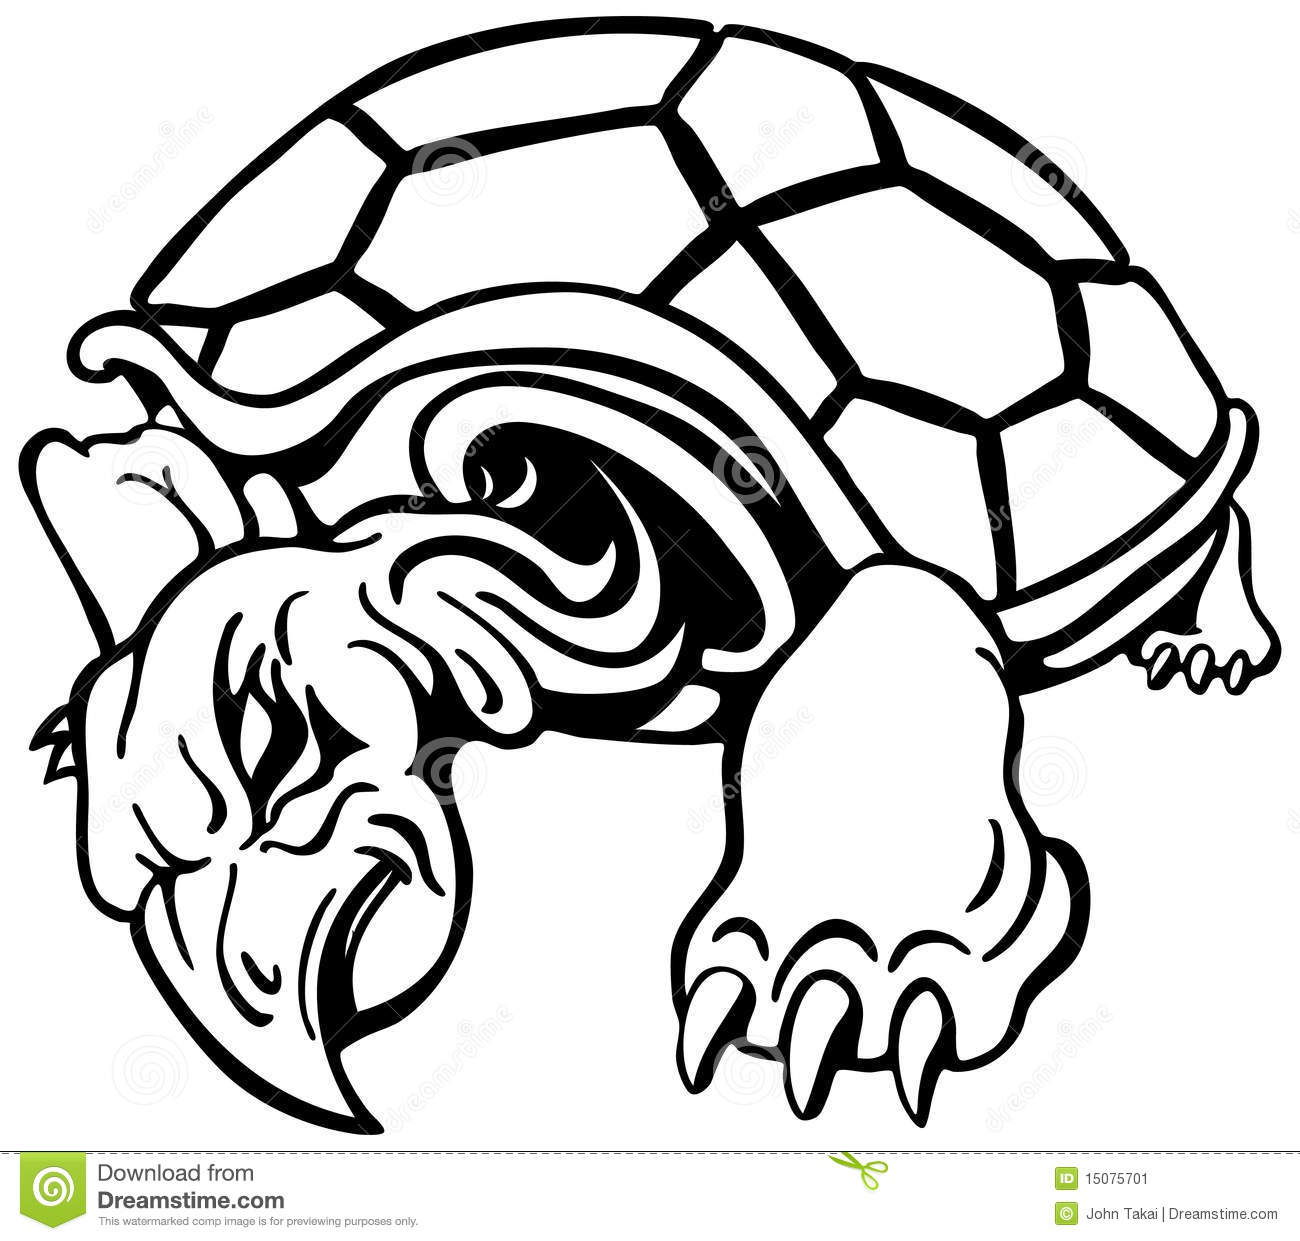 Angry Turtle Stock Image   Image  15075701